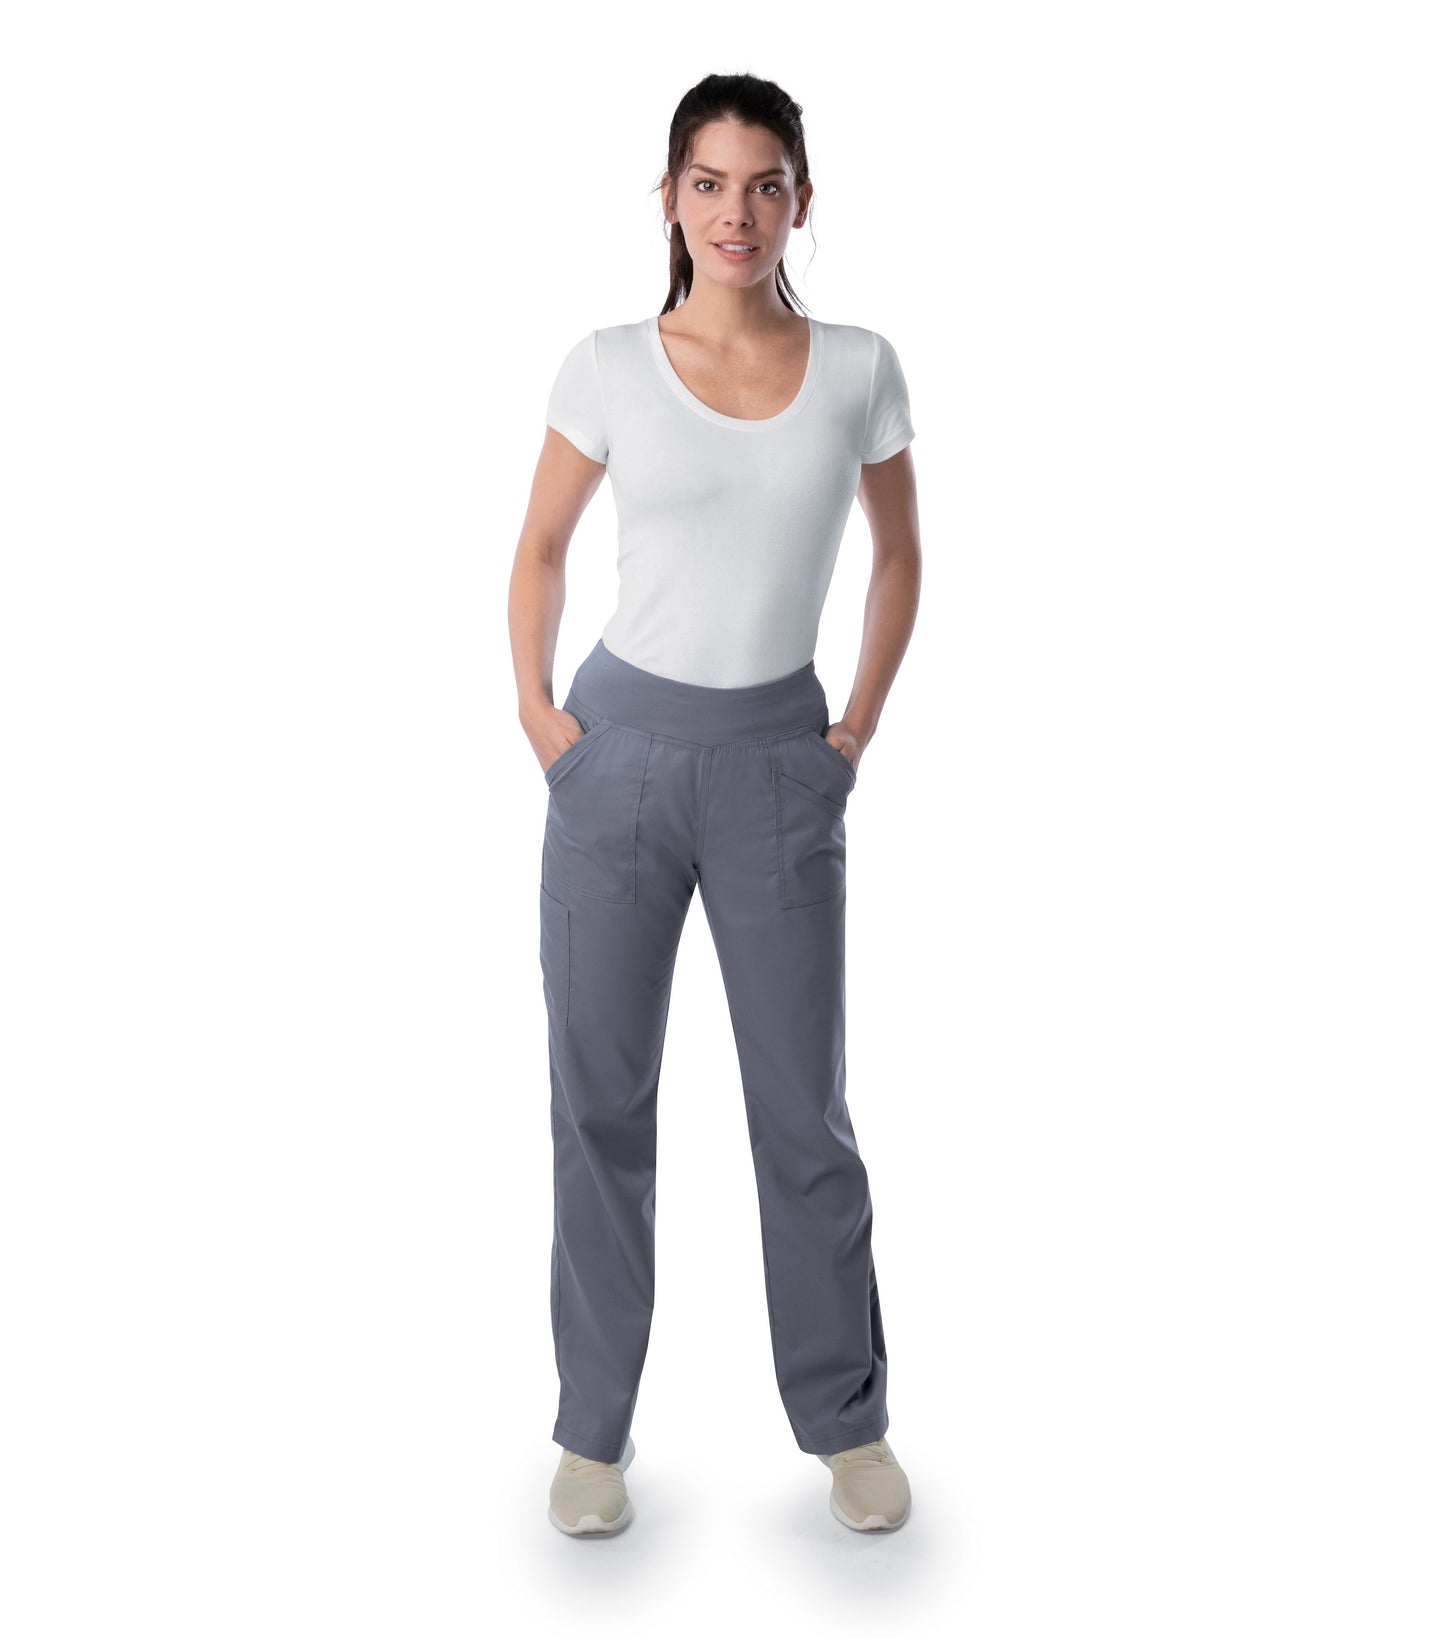 Landau 2043 Petite Women's Modern Yoga Pant